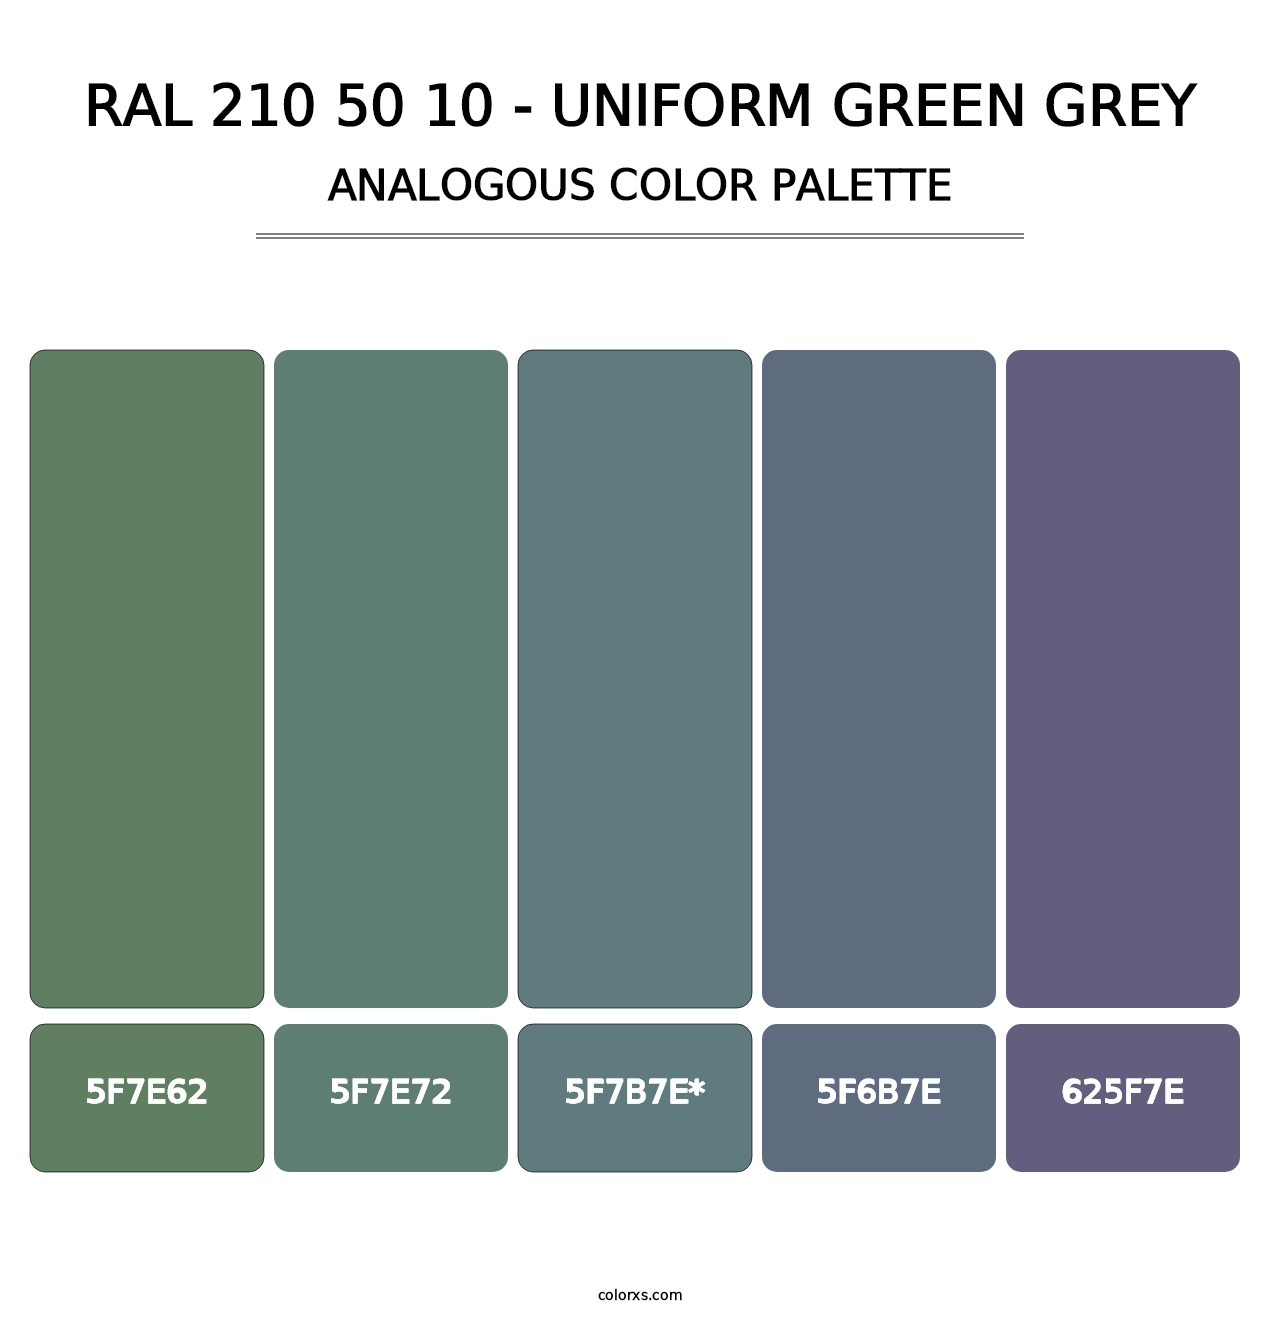 RAL 210 50 10 - Uniform Green Grey - Analogous Color Palette